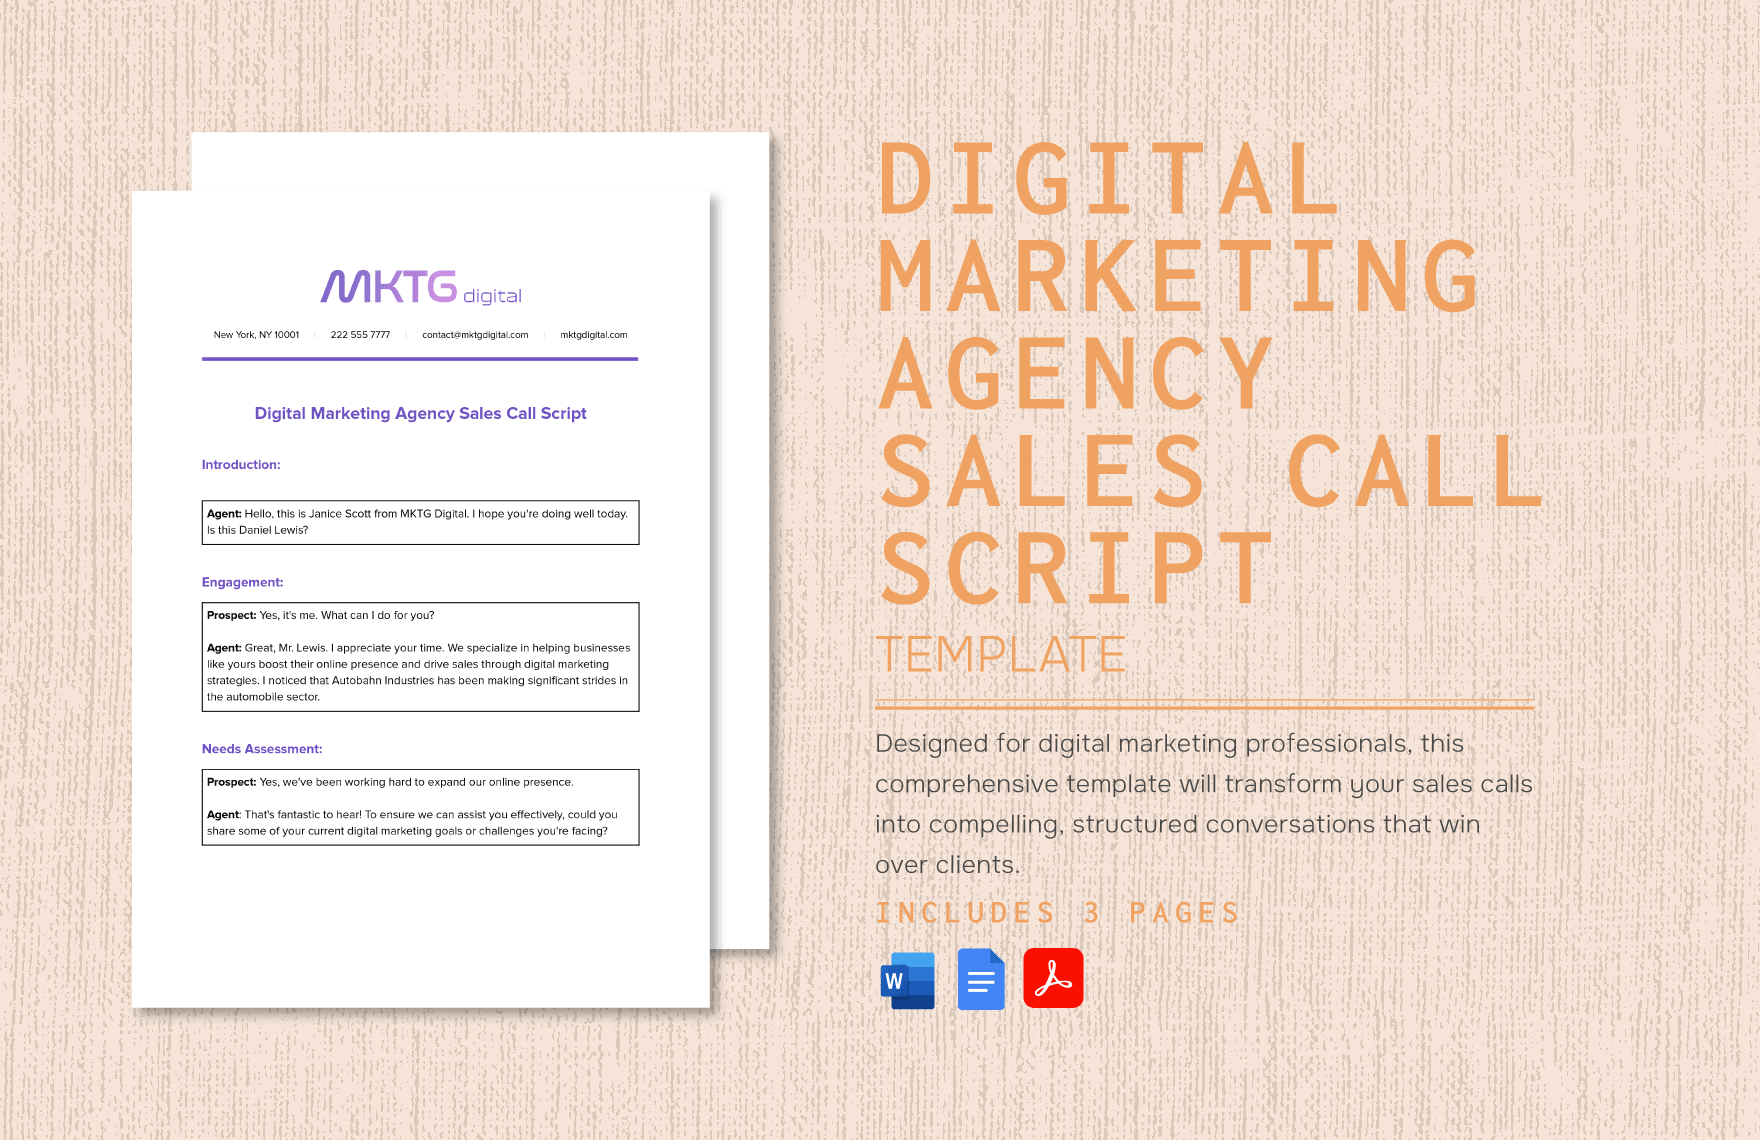 Digital Marketing Agency Sales Call Script Template